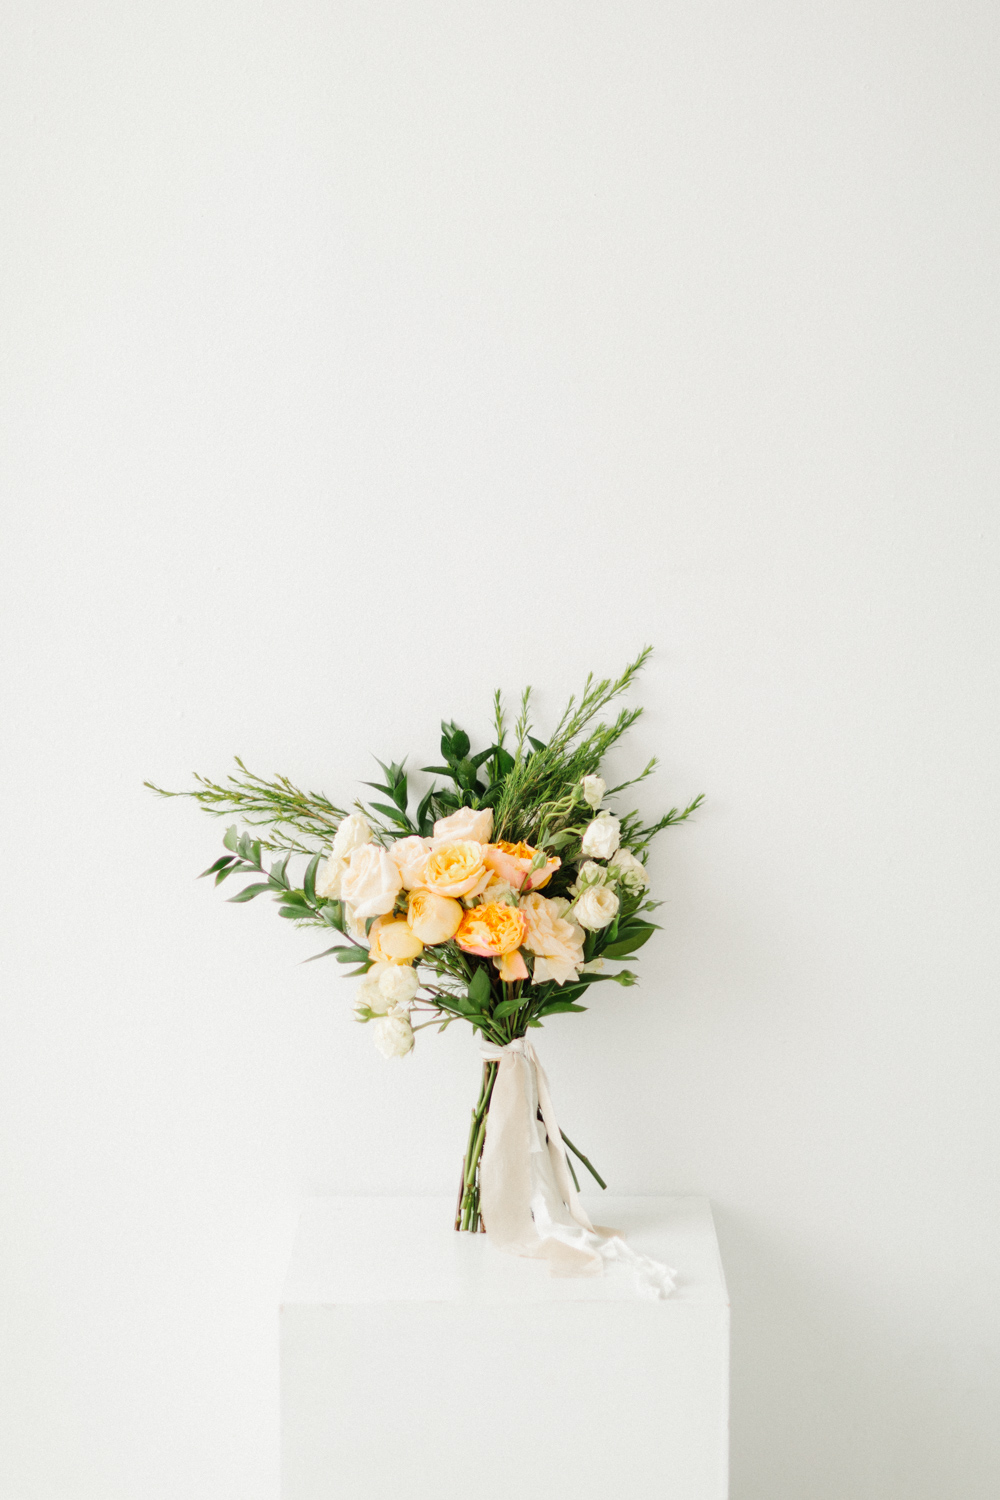 Seattle Fine Art Wedding Photographer | Seattle Downtown White Studio Bridal Session | Stunning Wedding Bouquet | Seattle Bride | Seattle Wedding | Photography Studio Space | Emma Rose Company Wedding Photography-1.jpg